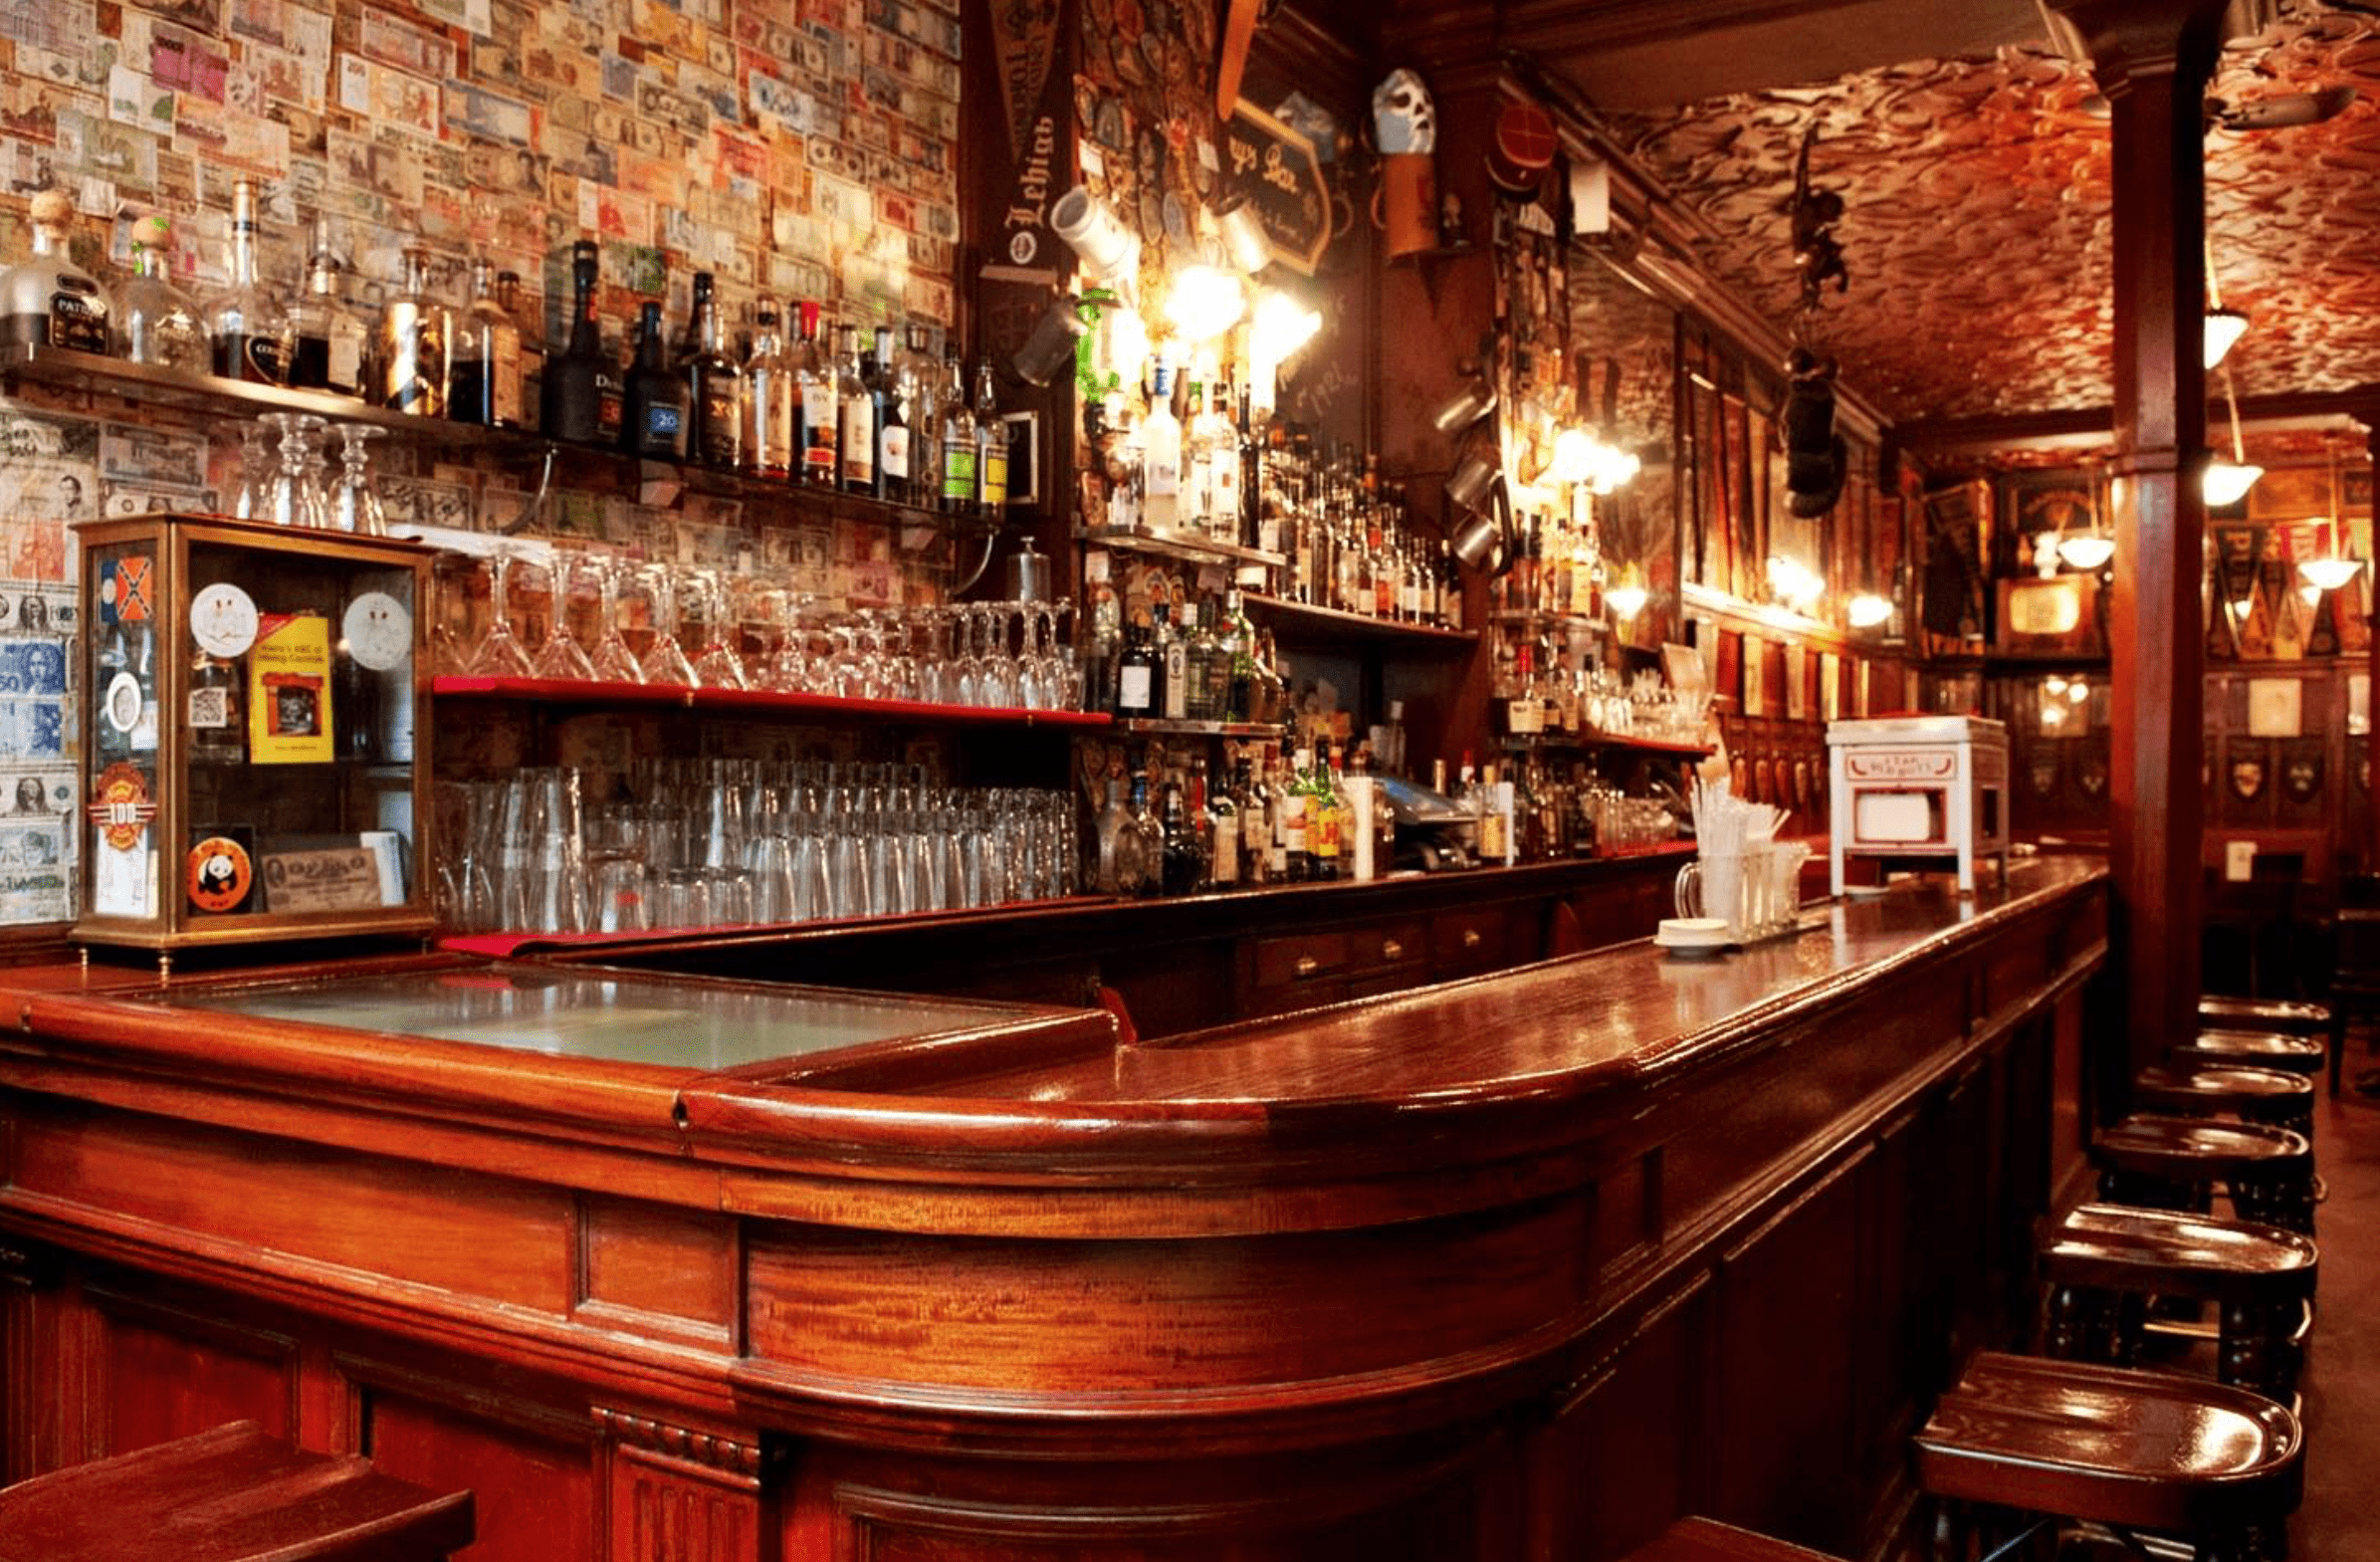 Harry’s Bar